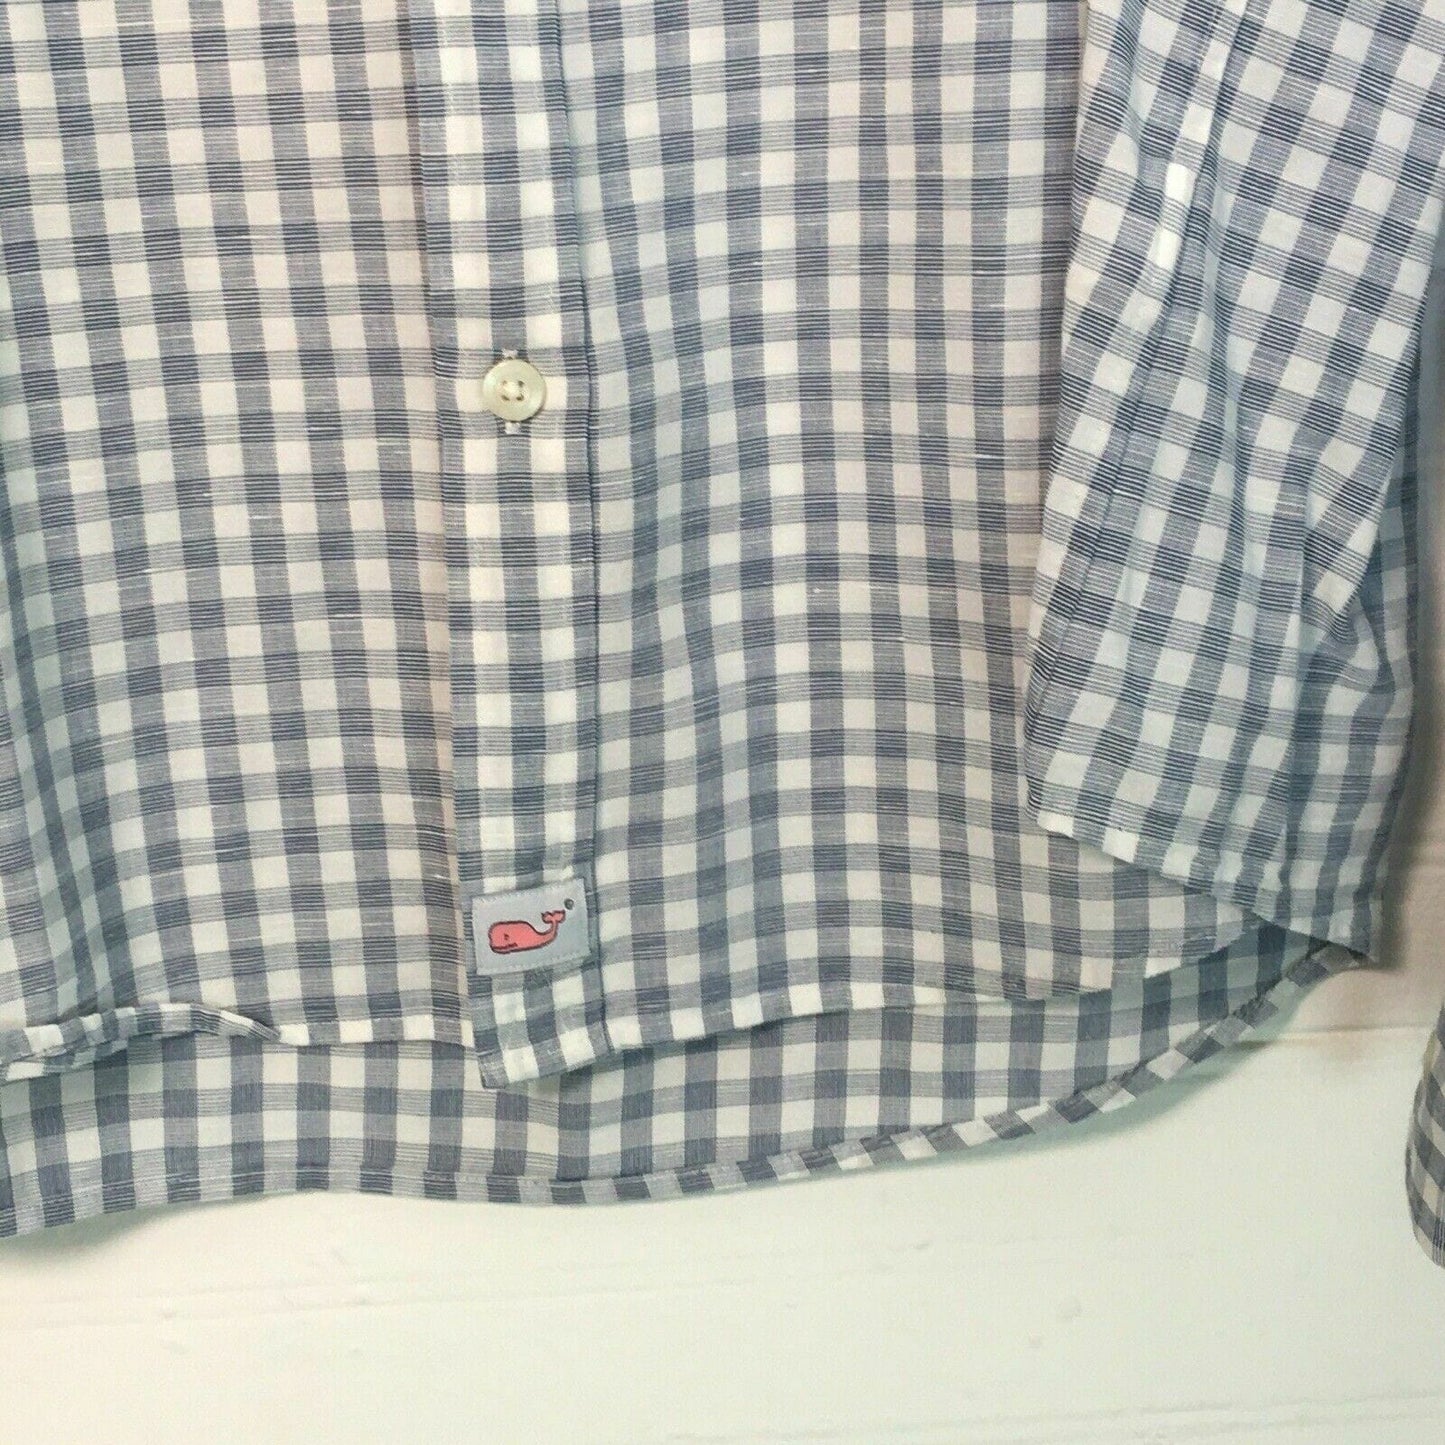 Sophisticated Vineyard Vines Men's Gray White Check Plaid Button-Up Shirt L Long Sleeve